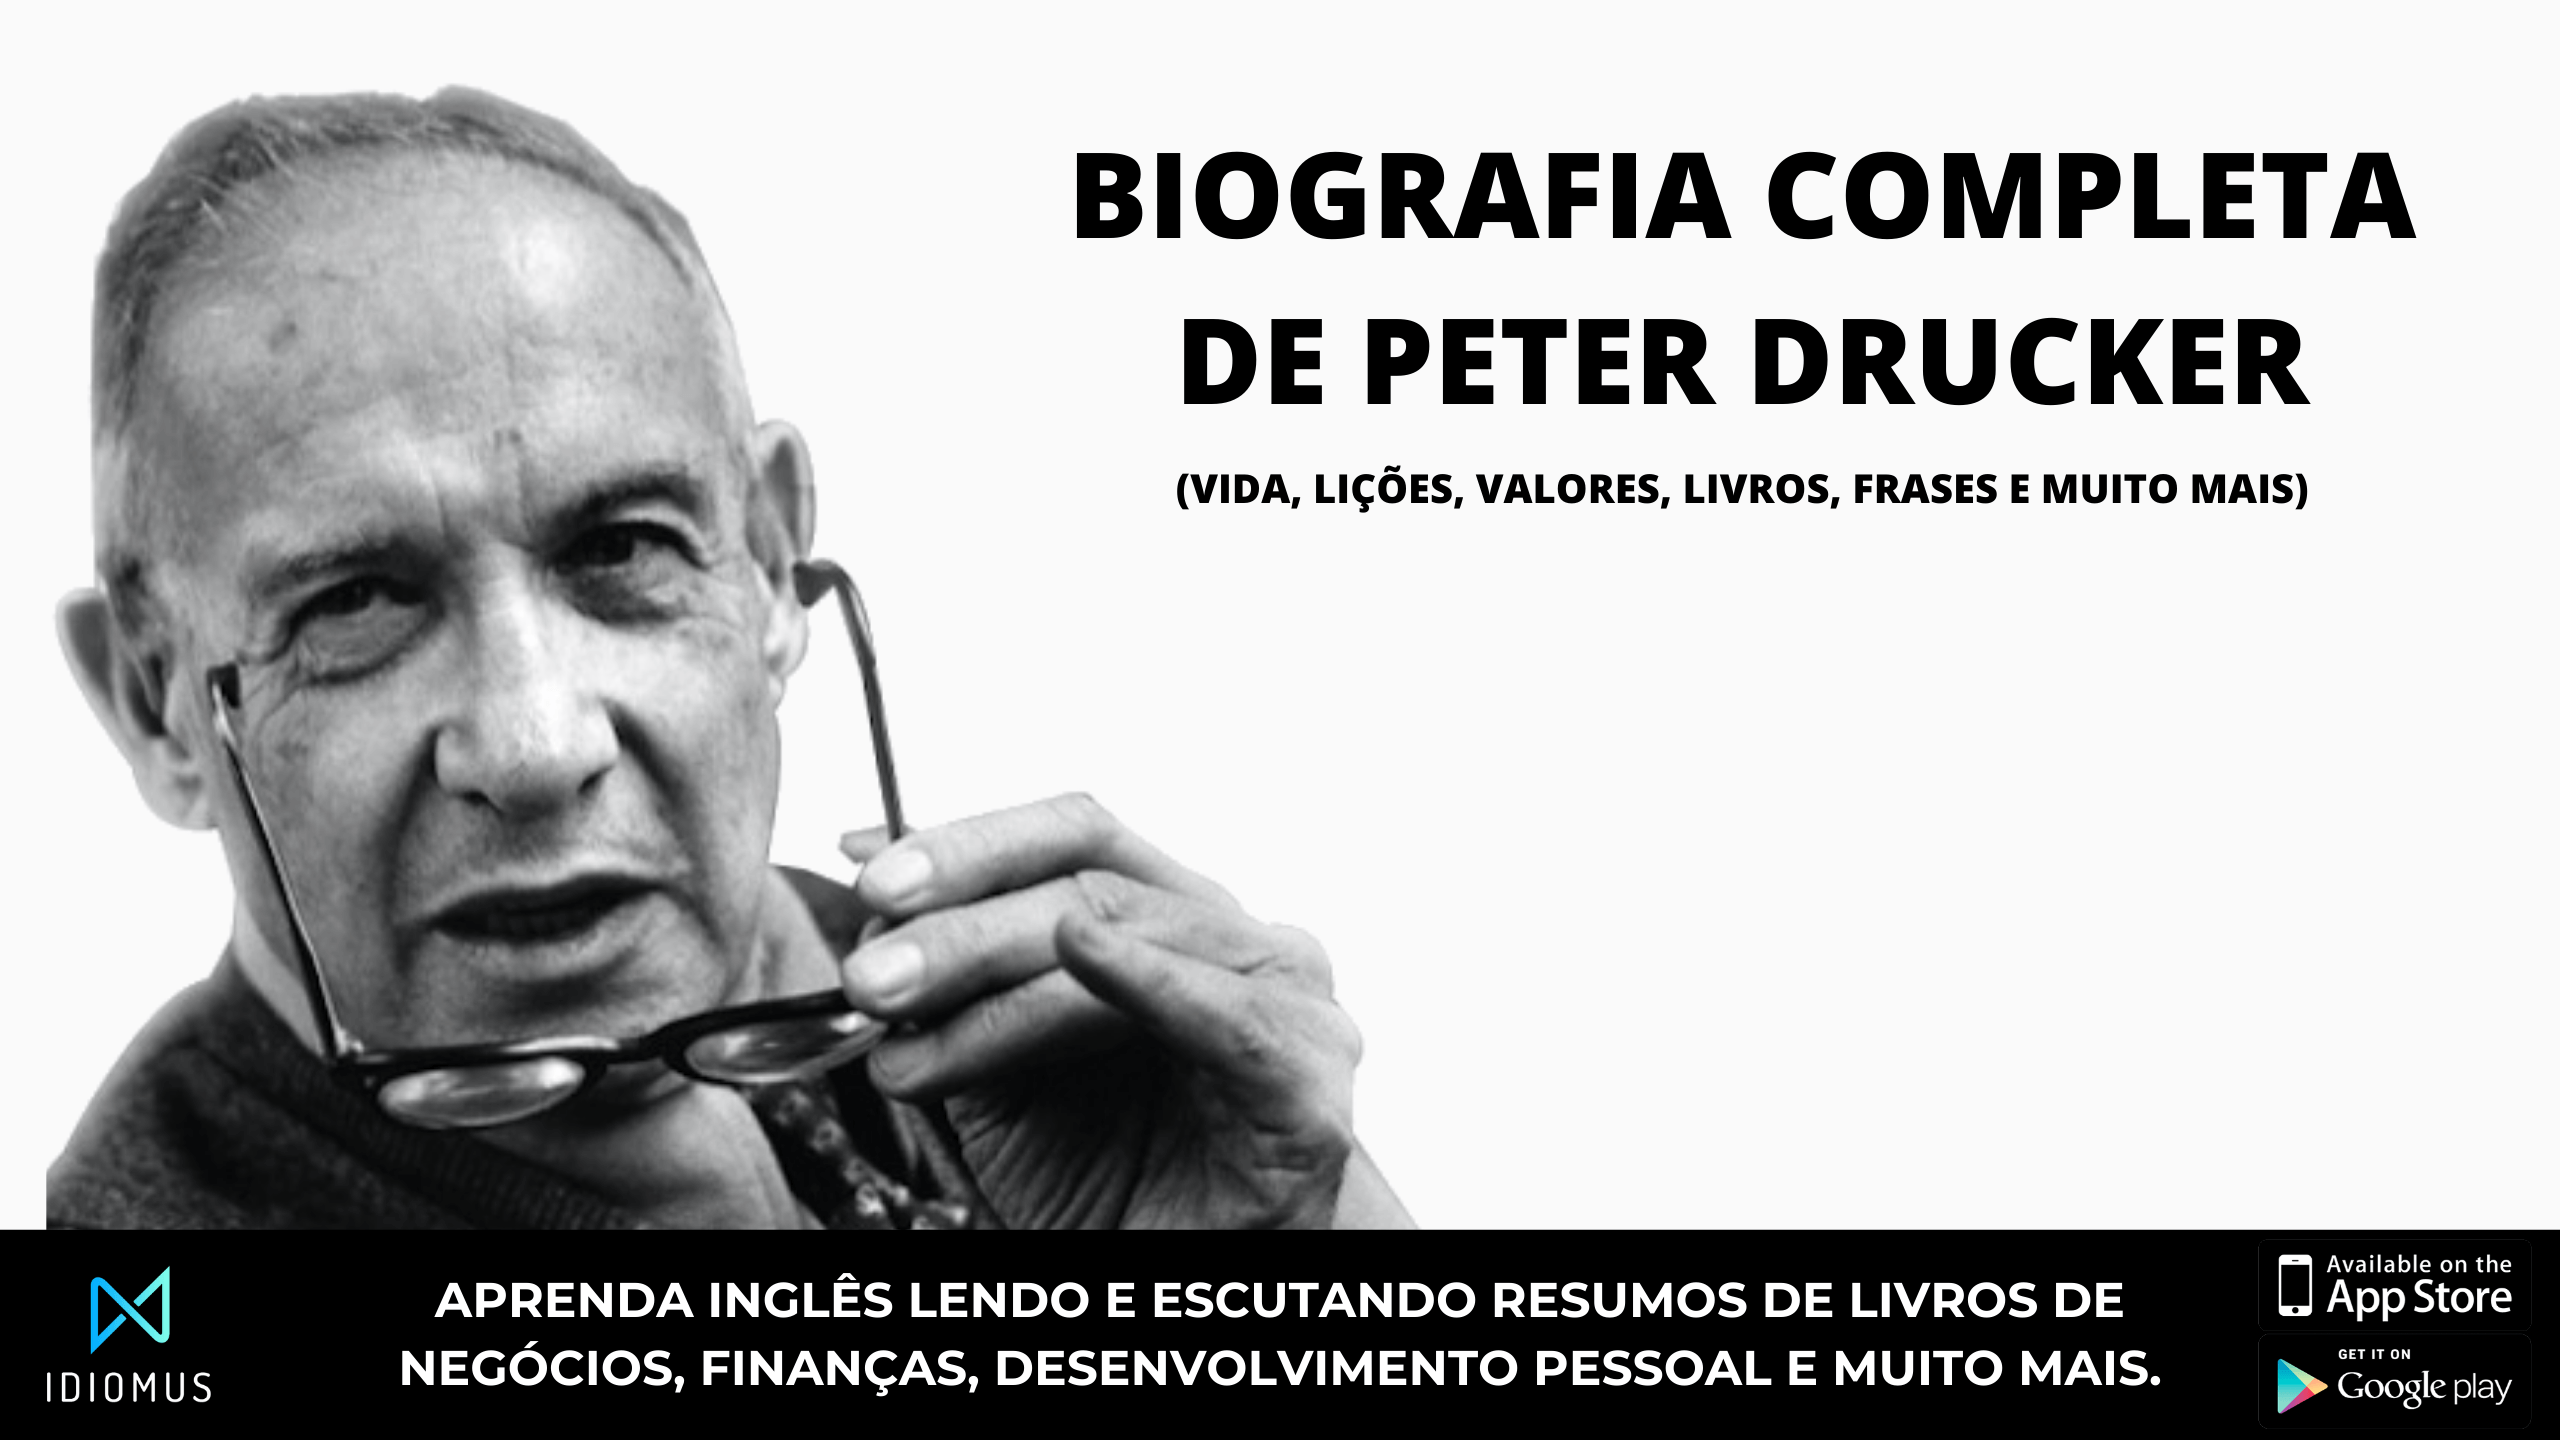 Peter drucker - biografia completa